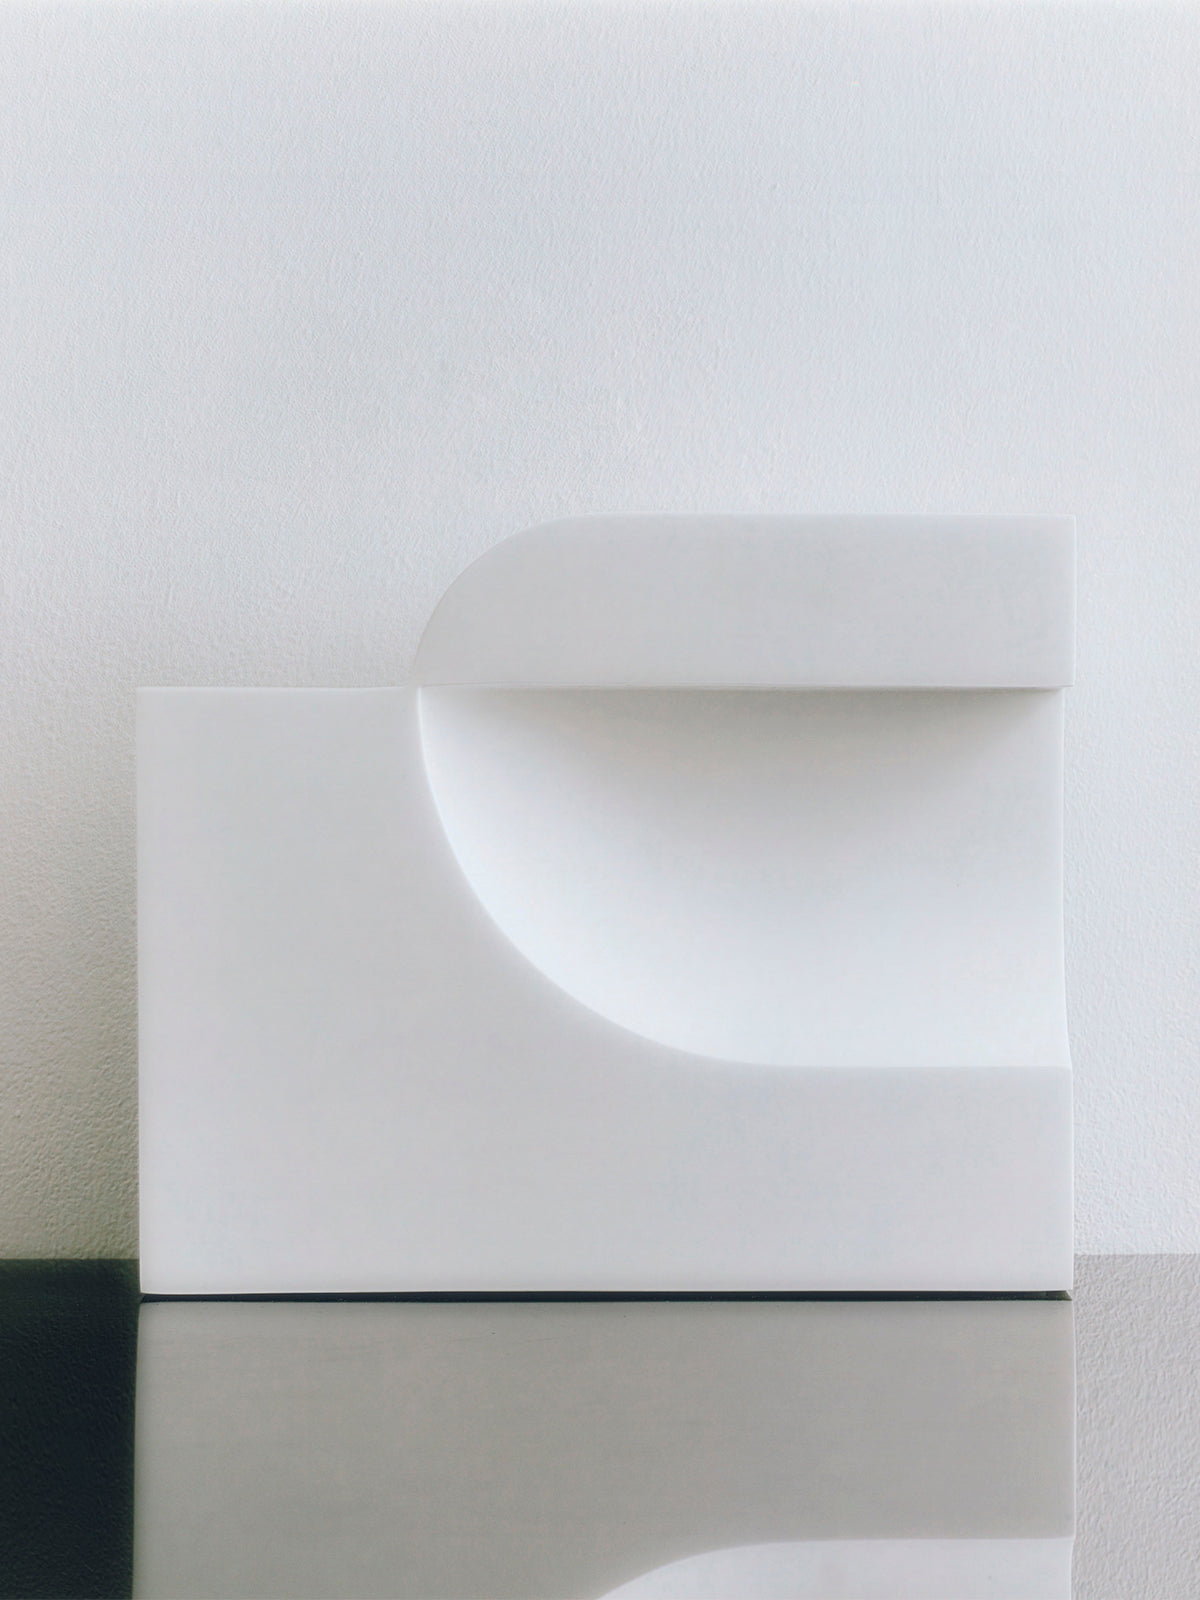 Moby 1 designed by Birgitte Due Madsen,Jonas Trampedach, 2015